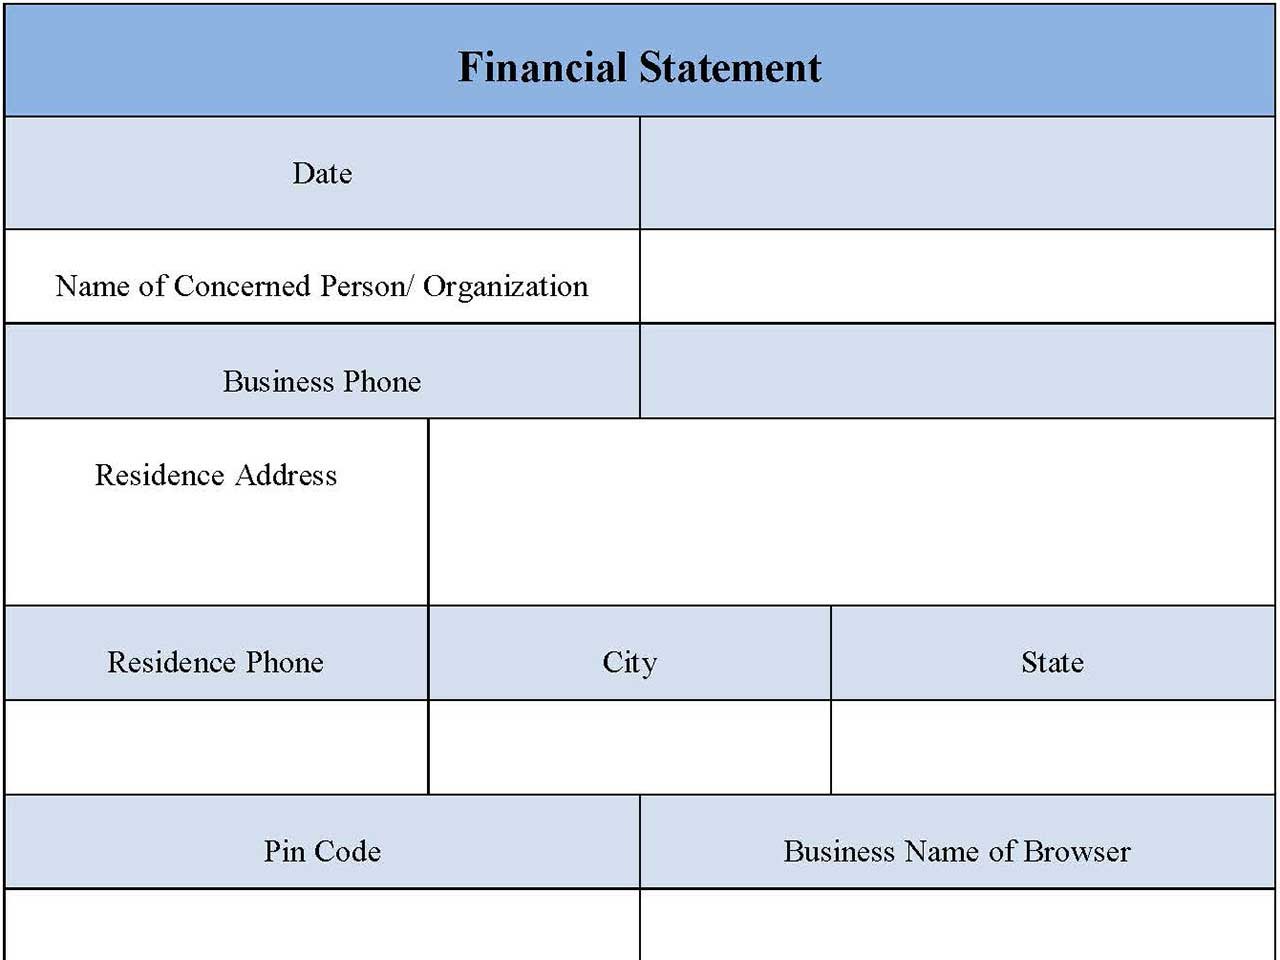 Financial Statement Form